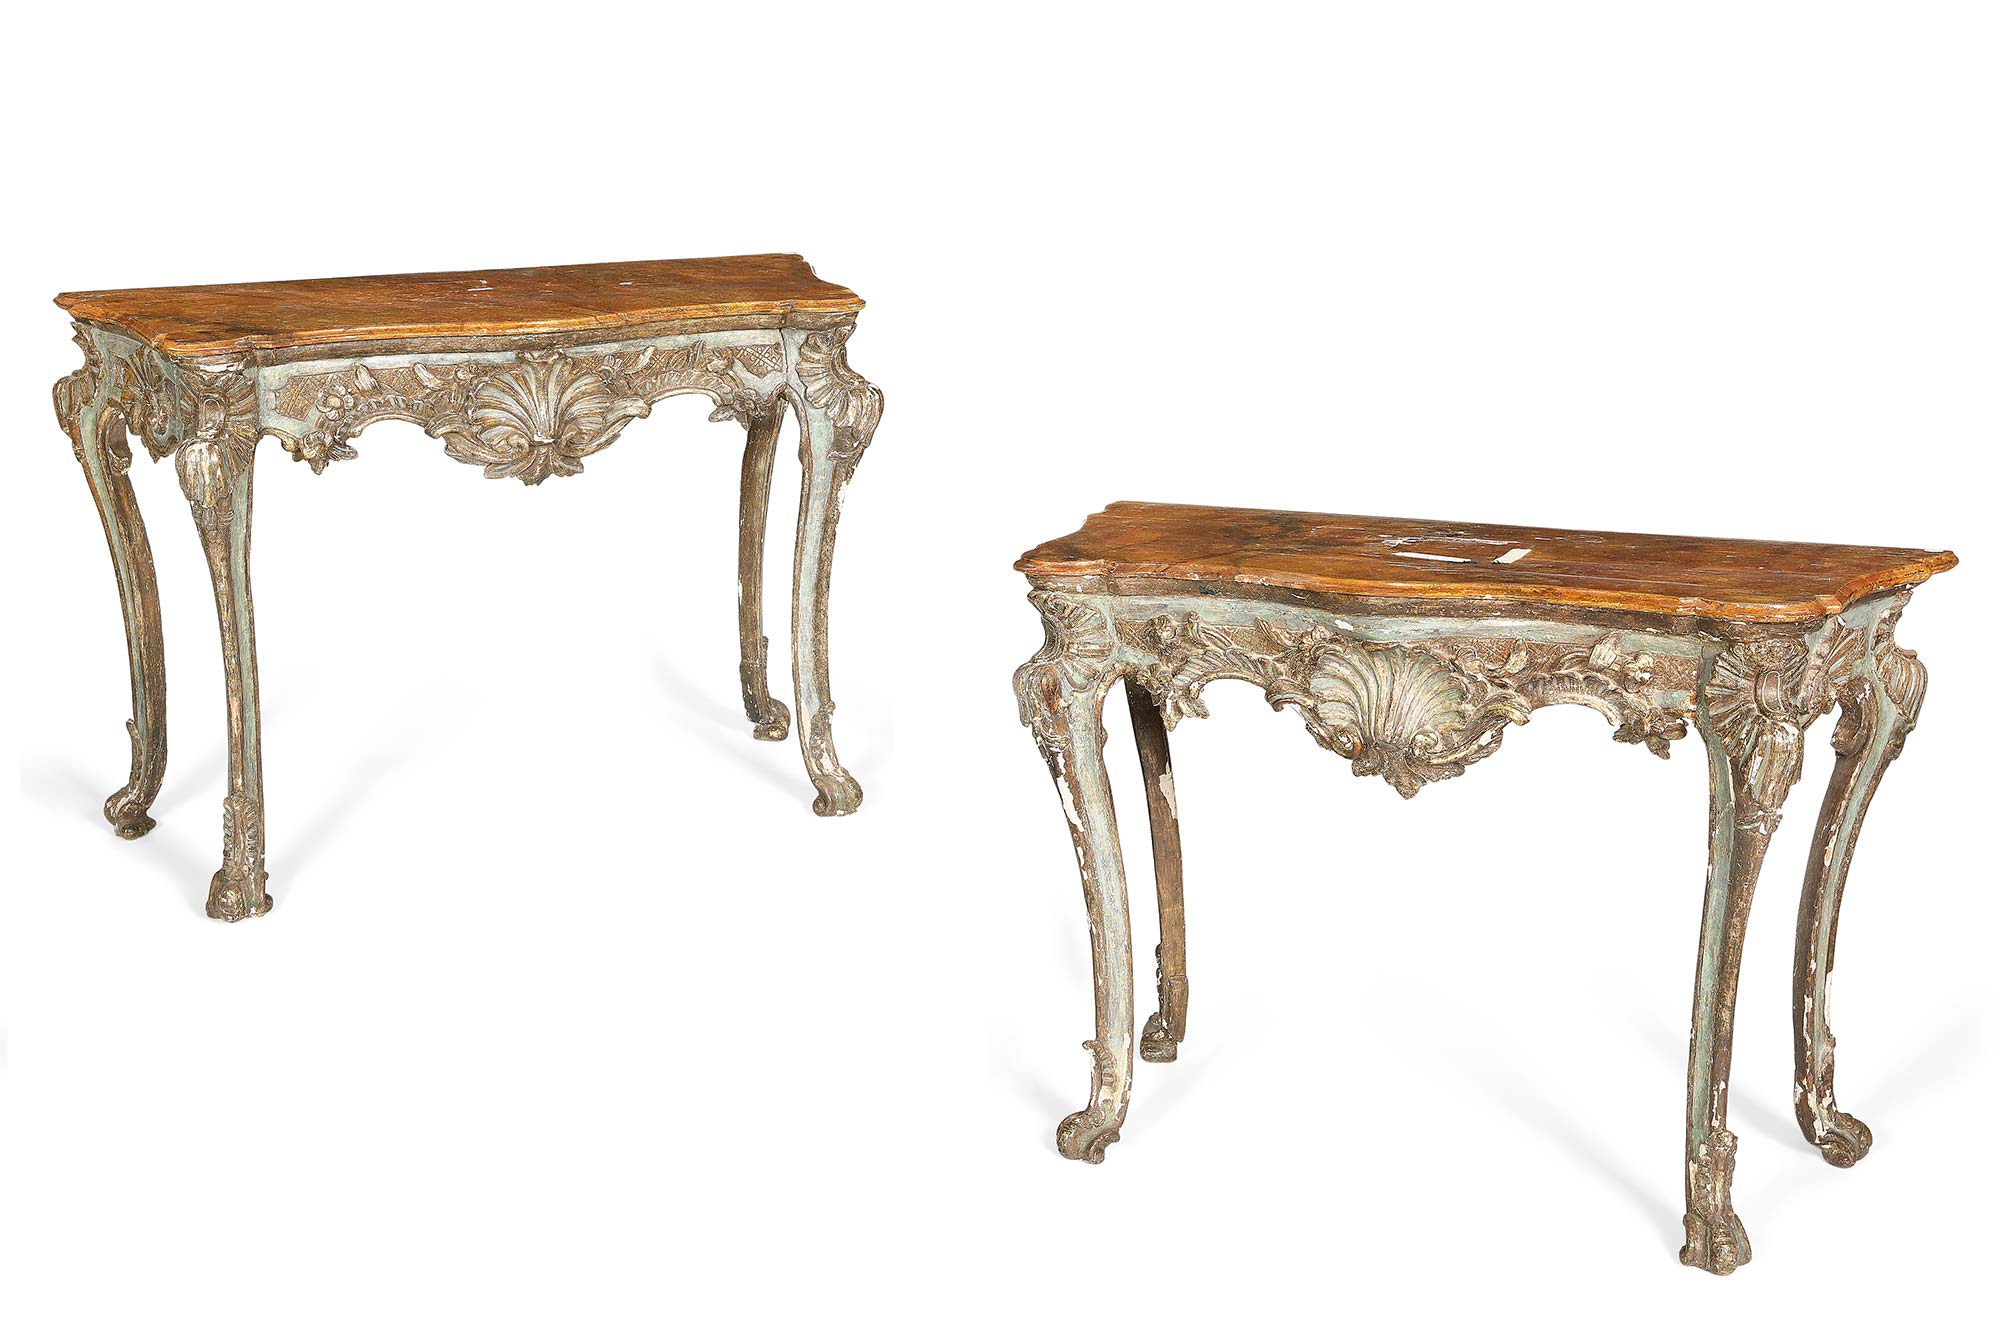 Mid-18th century Italian Rococo console tables, $10,000-$15,000. Image courtesy Andrew Jones Auctions